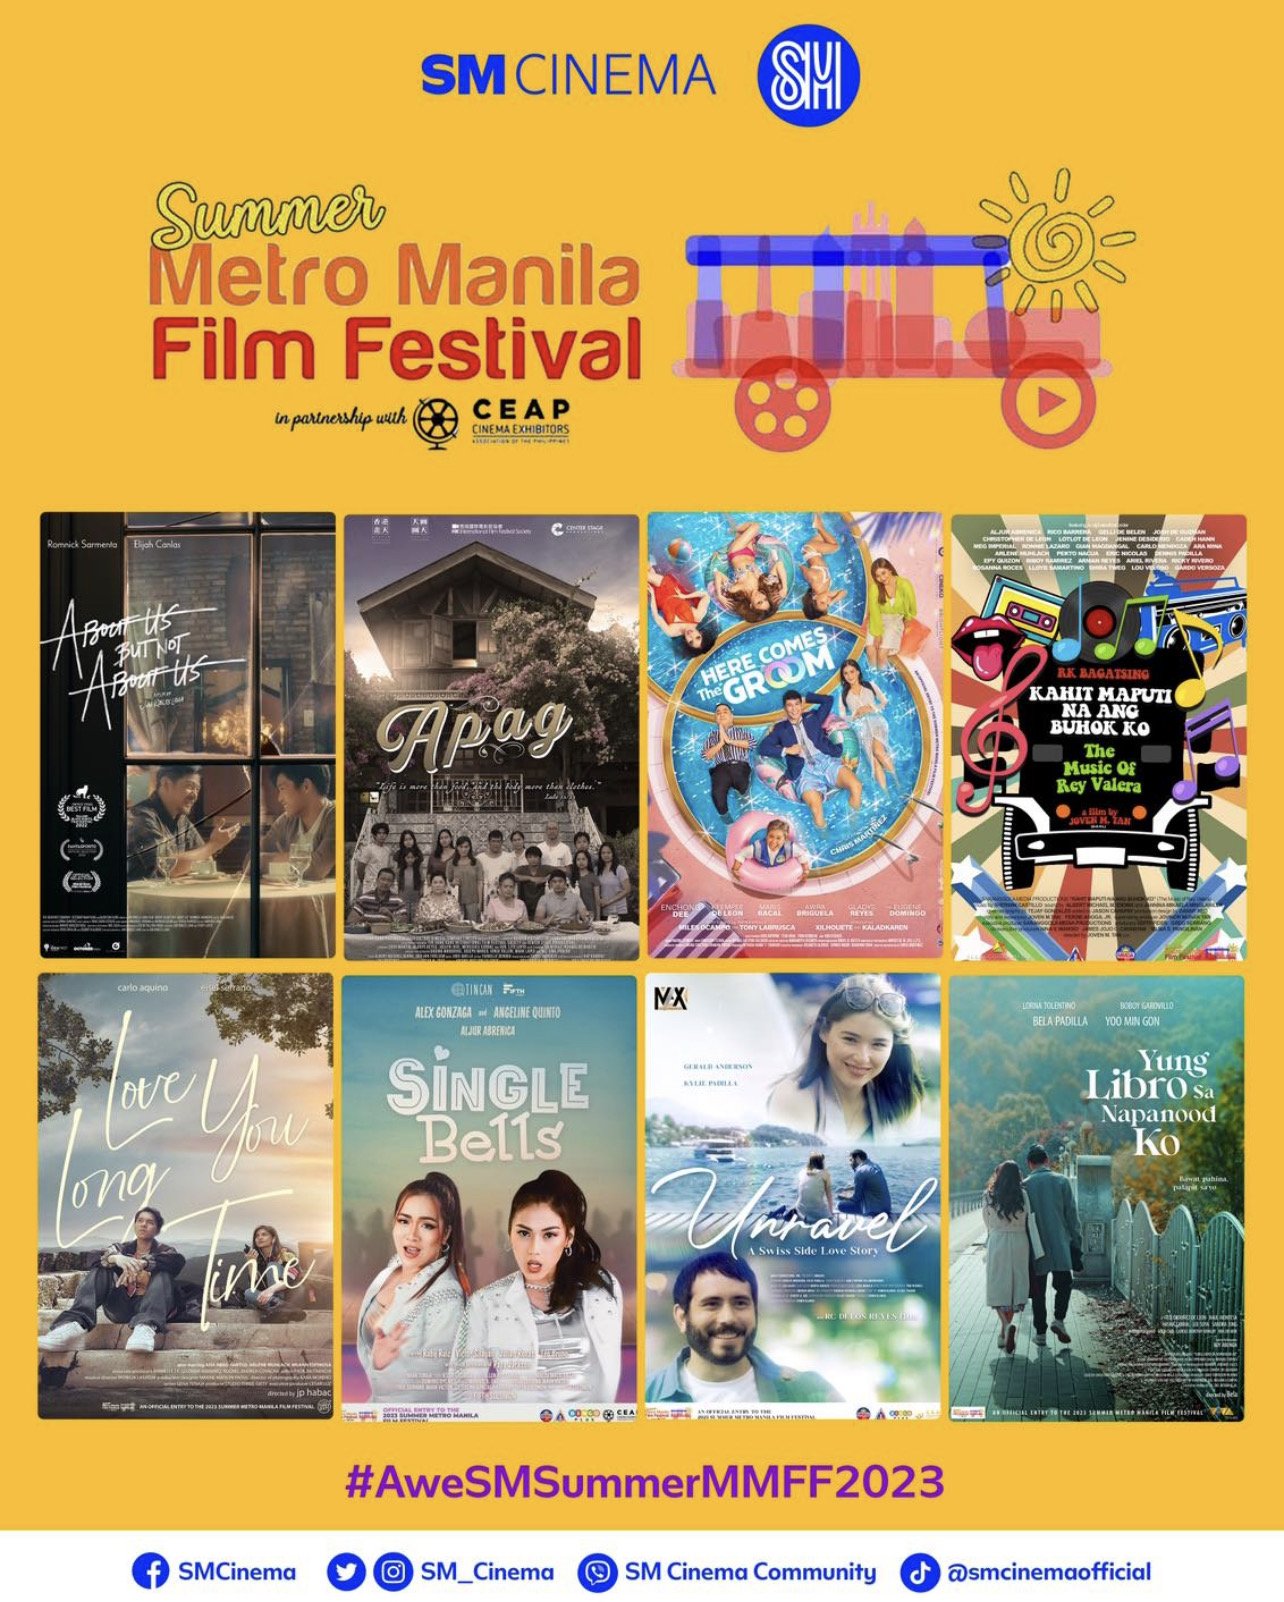 Catch the 1stever Summer Manila Film Festival at SM Cinemas Pampanga